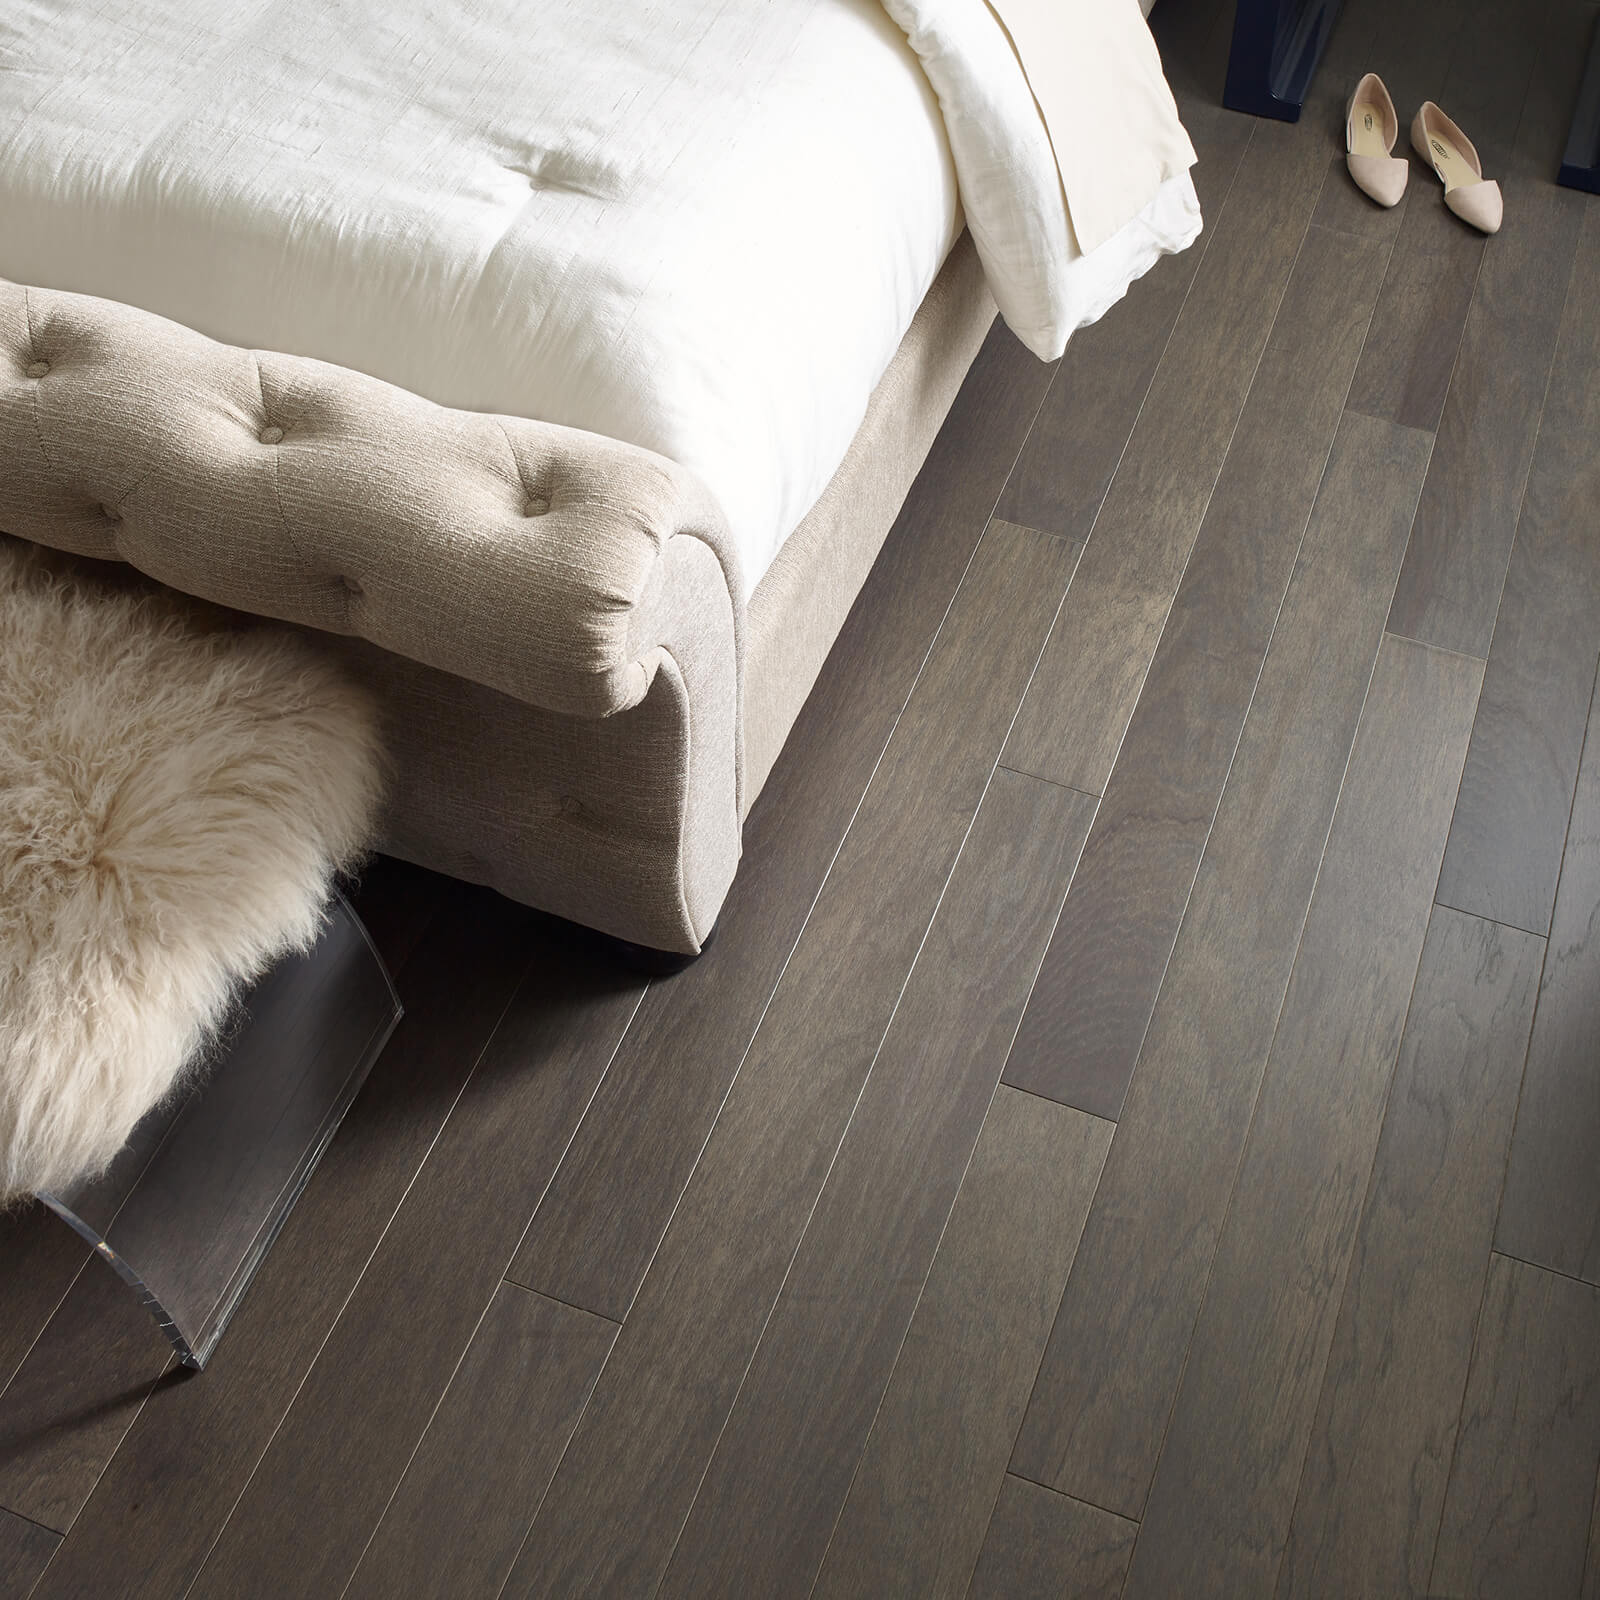 Hardwood flooring in bedroom | Faris Carpet & Tile